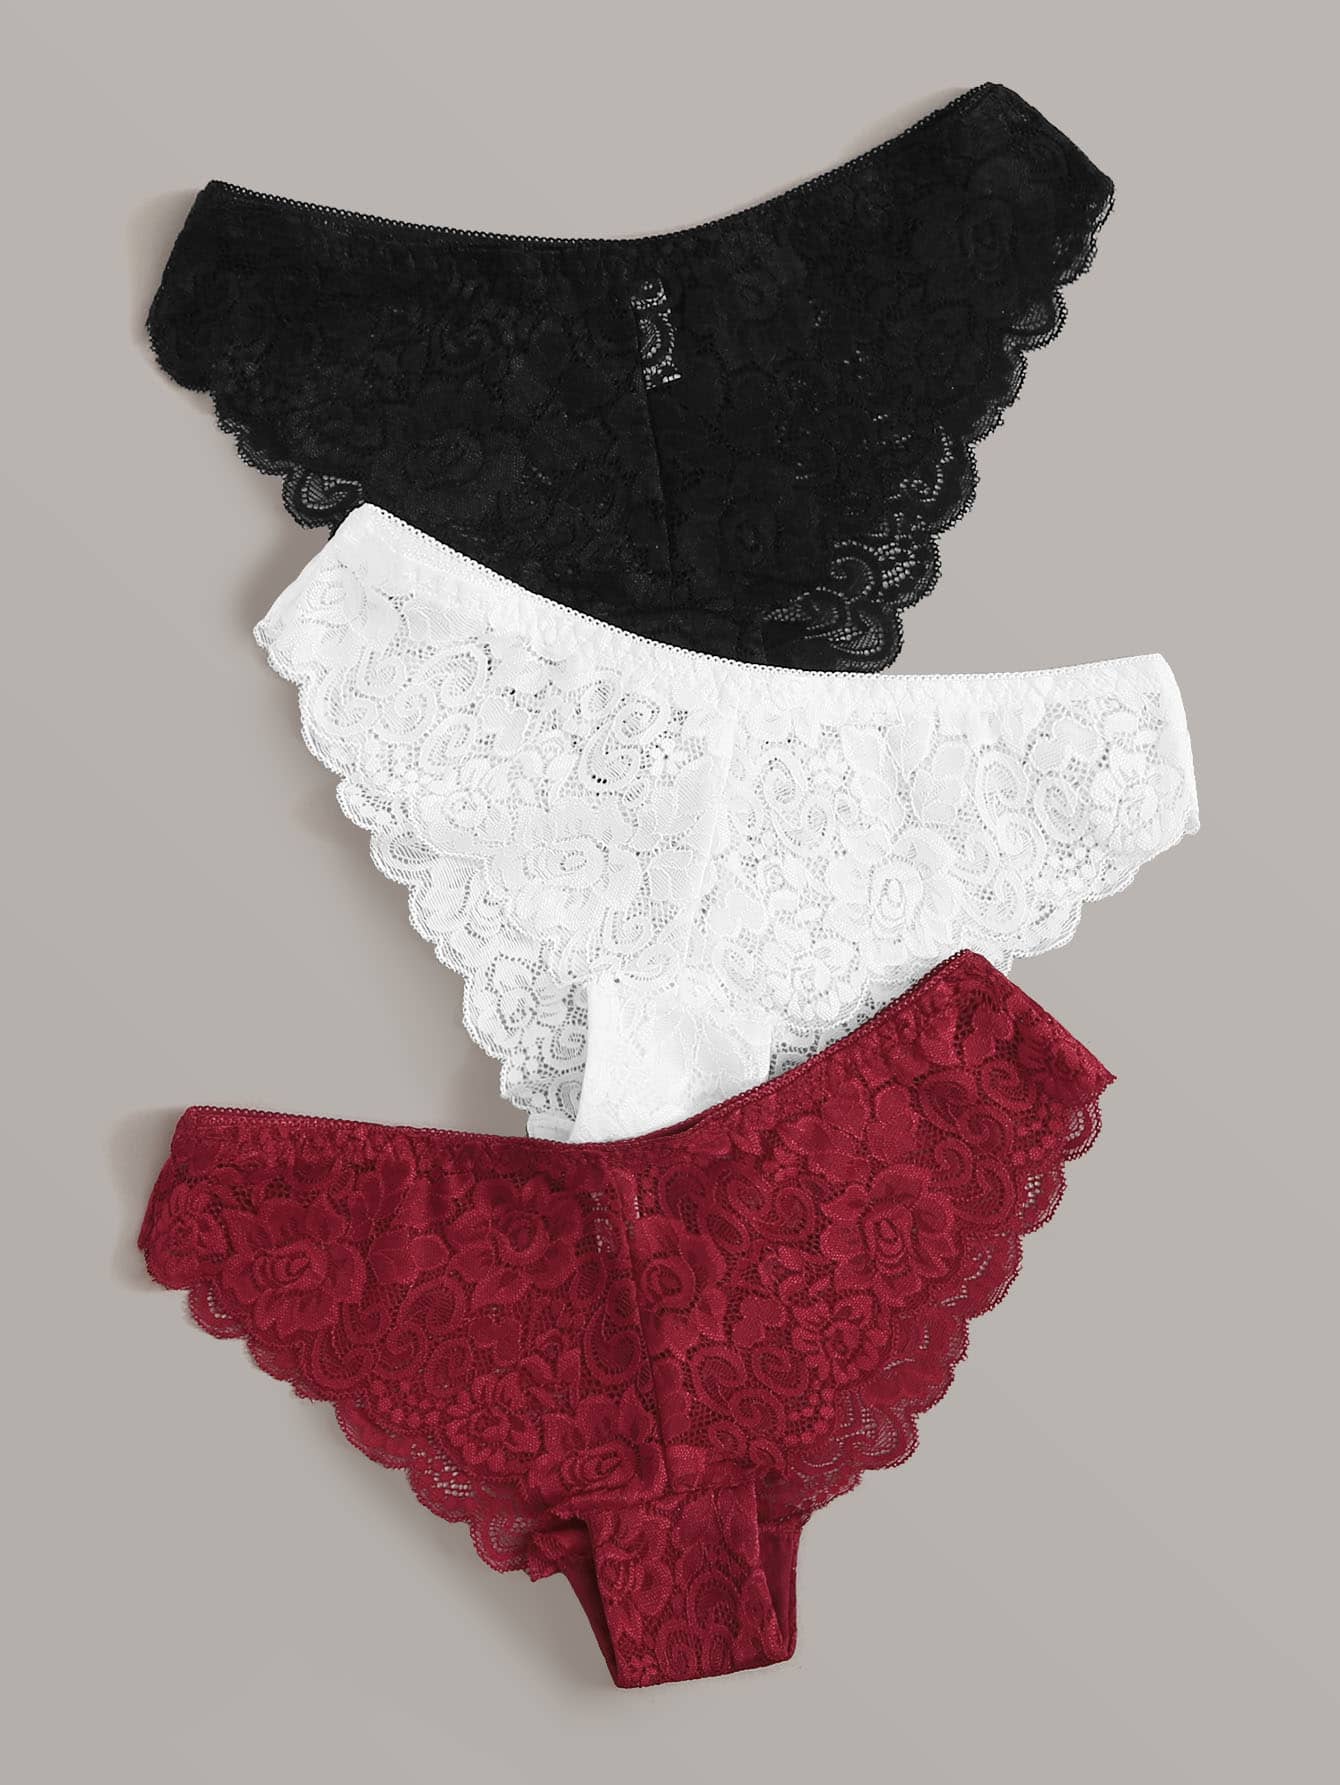 SheIn Women's 3 Piece Low Rise Panties Underwear Floral Lace